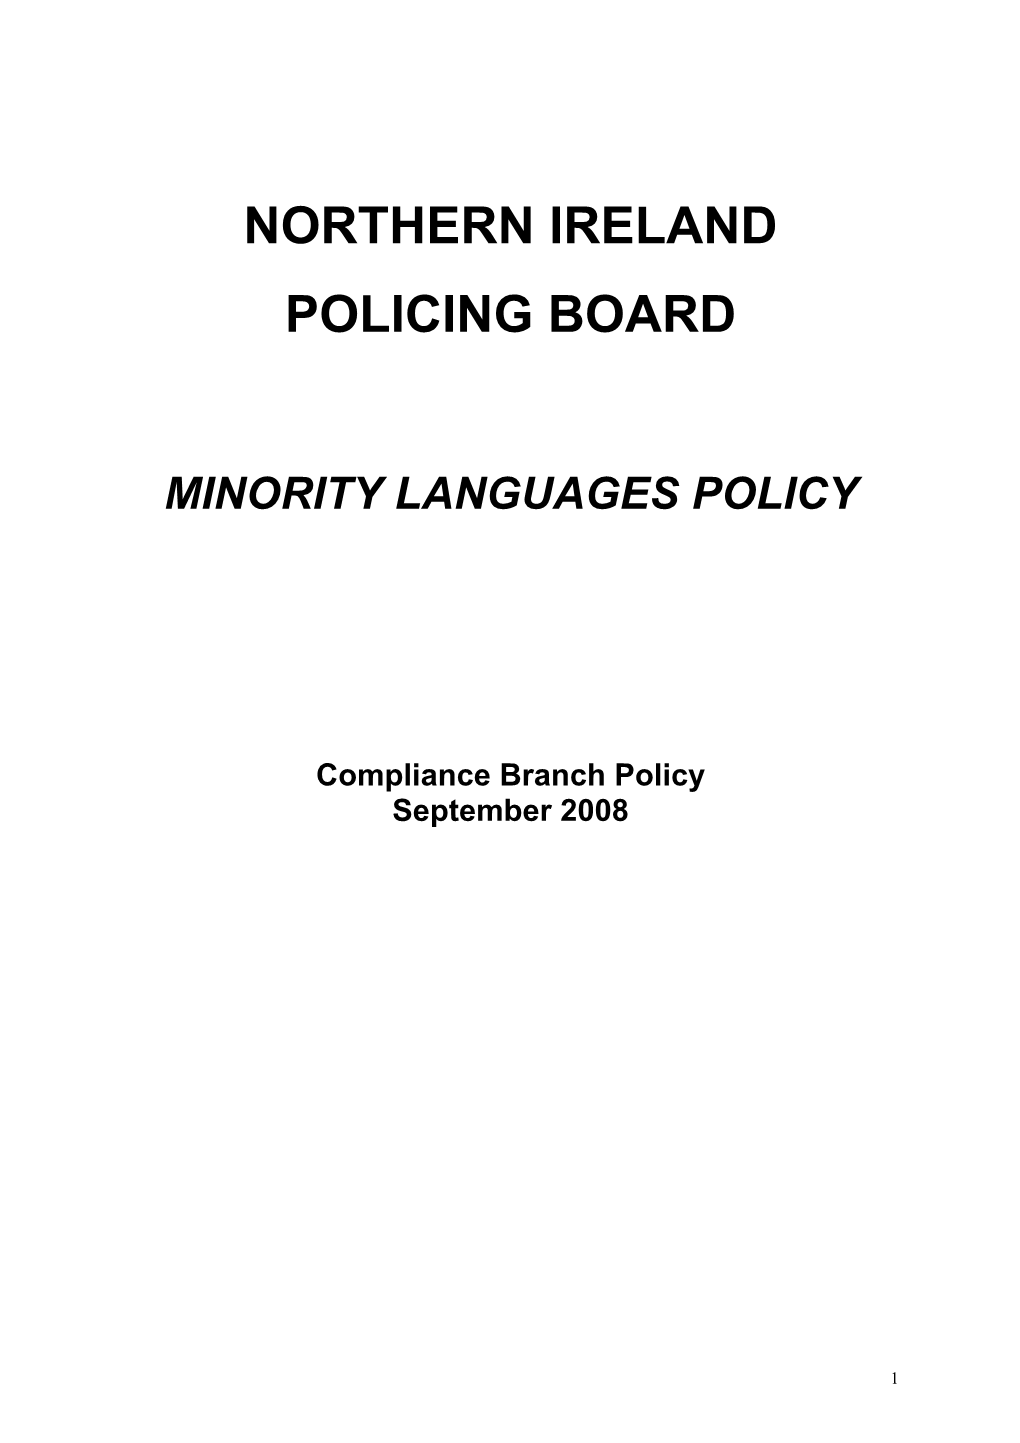 Northern Ireland Policing Board Minority Languages